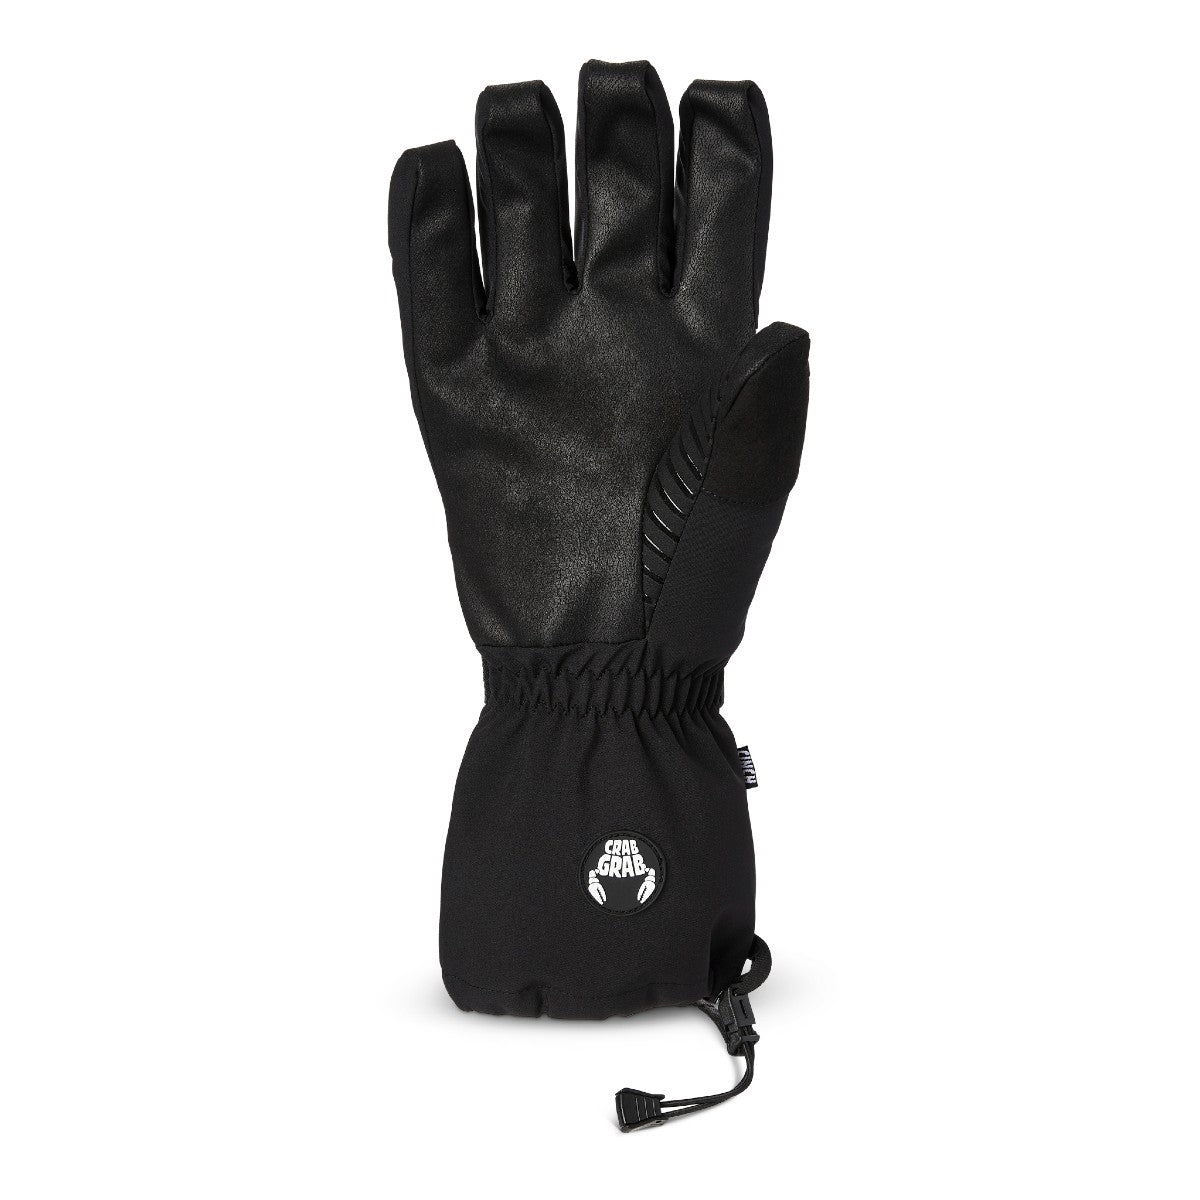 Crab Grab - Cinch Glove - Black